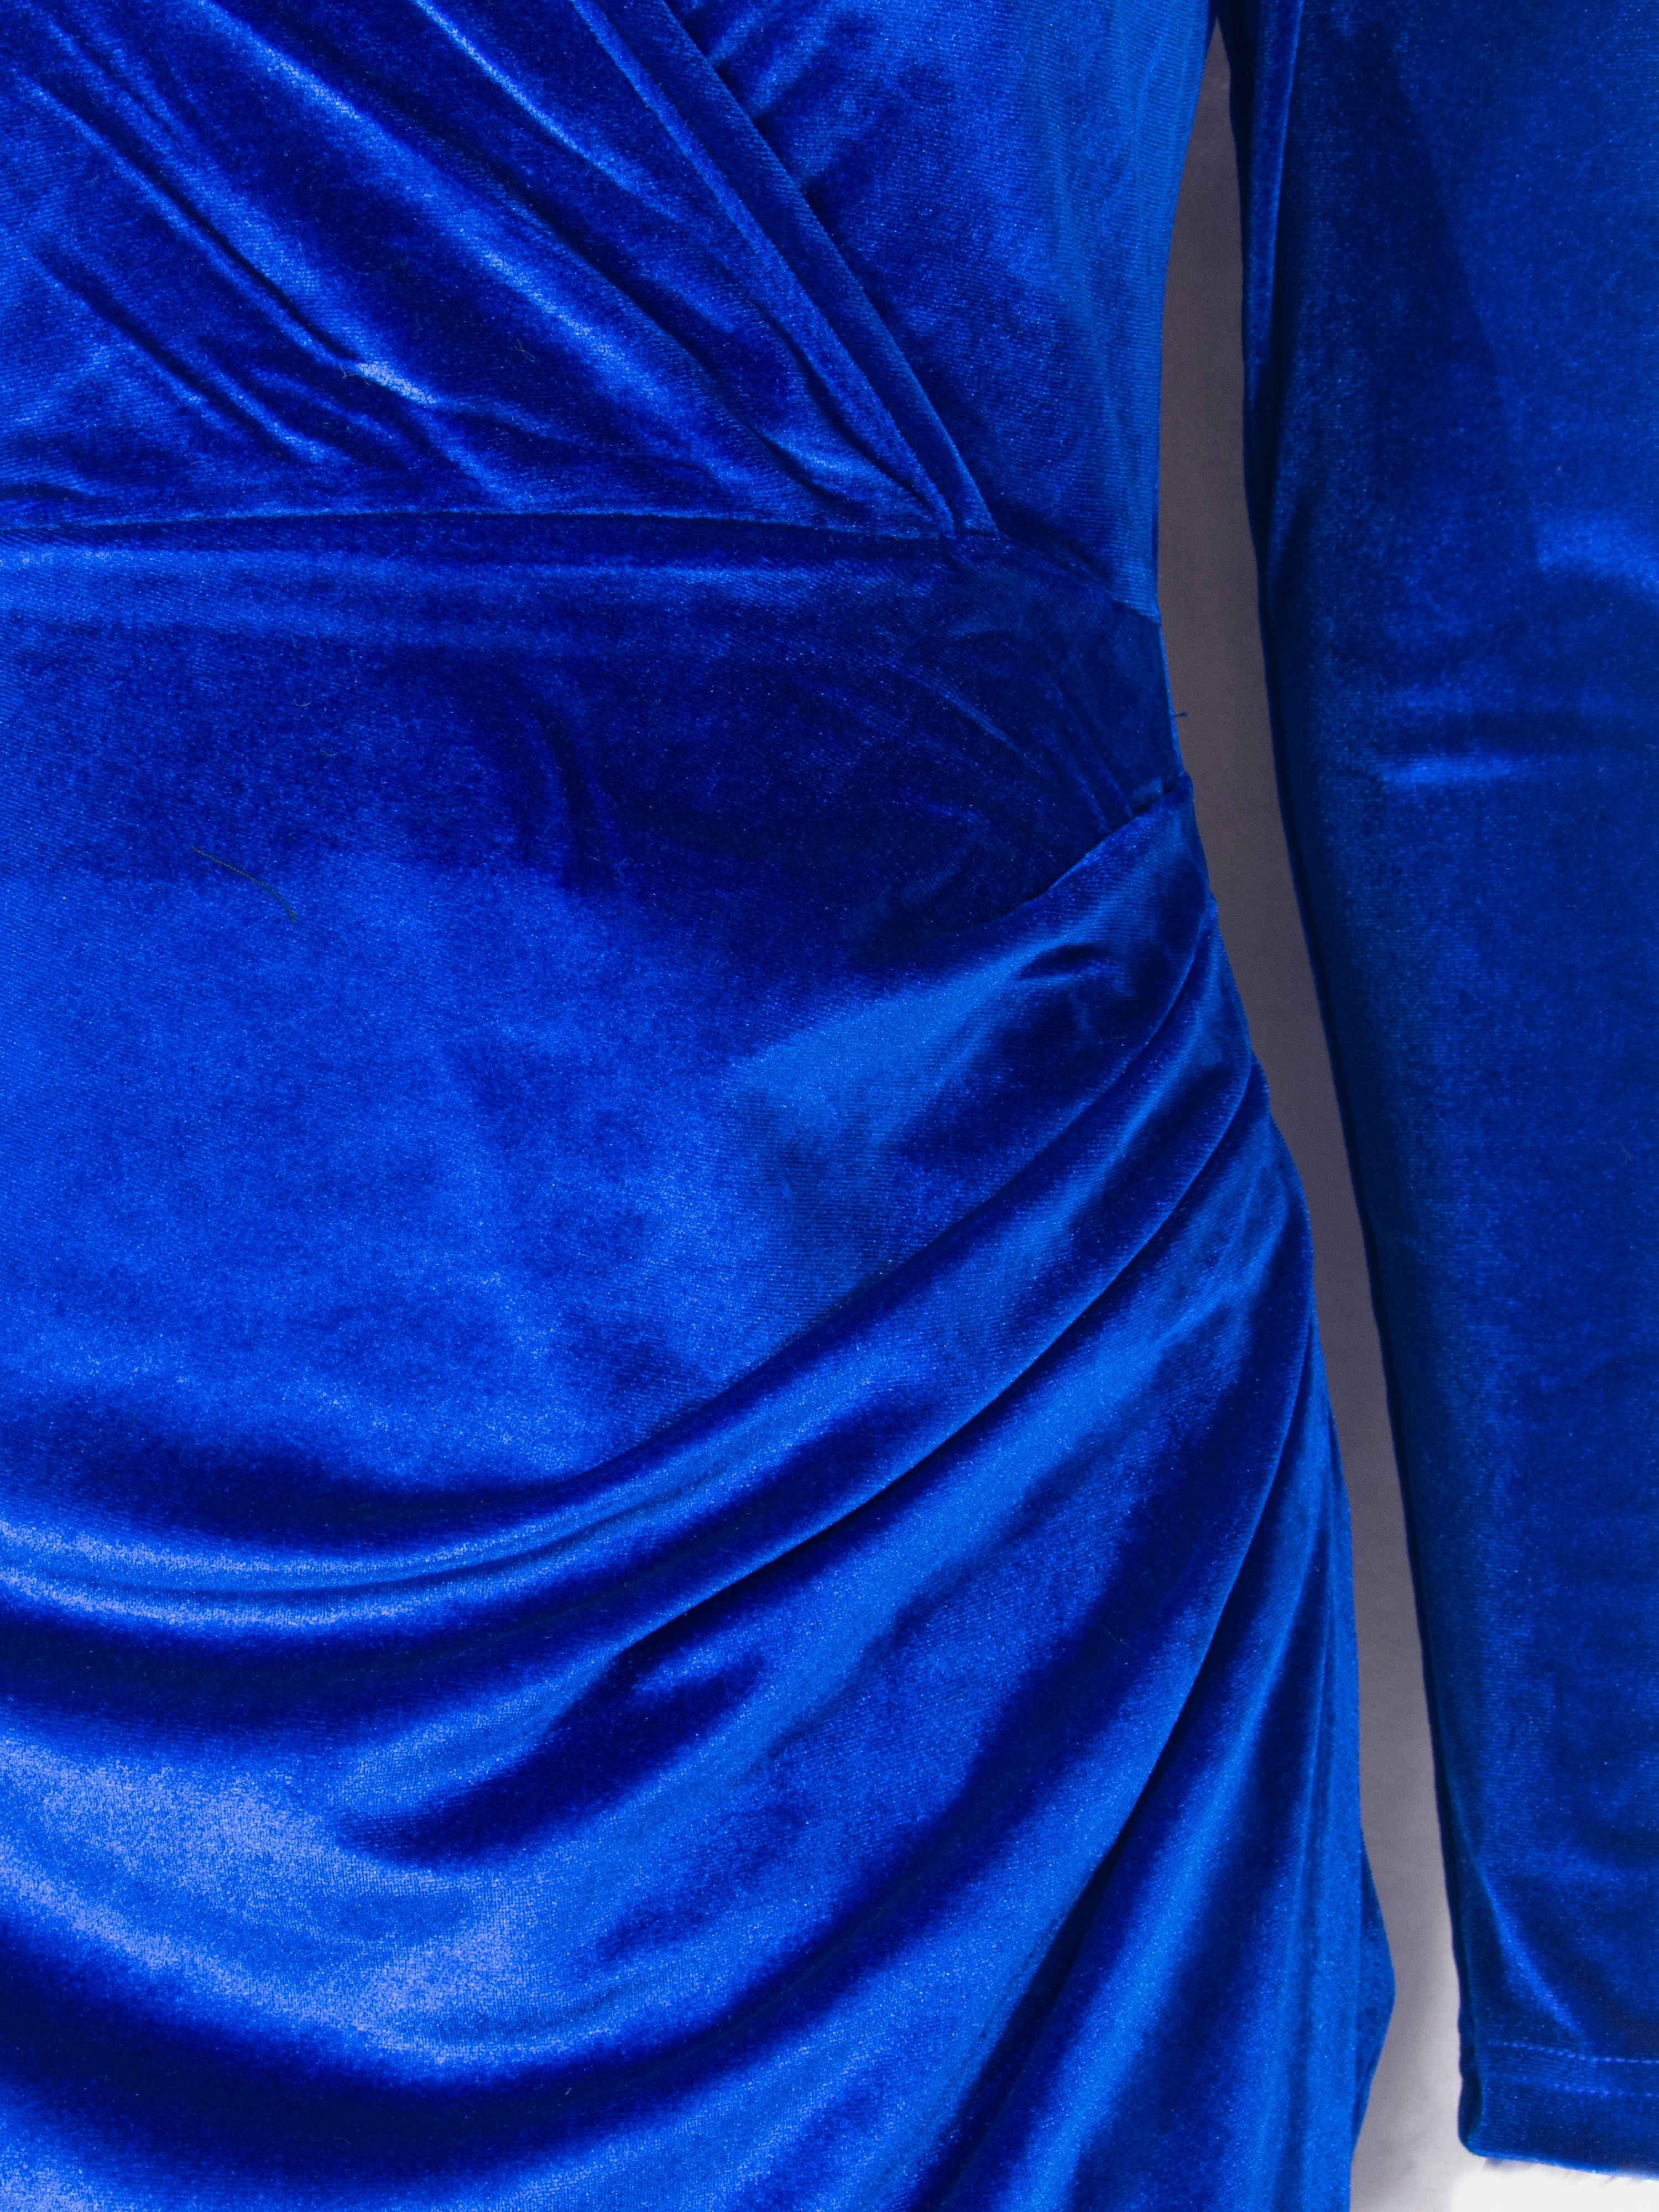 CALVIN KLEIN Royal Blue Velvet Dress Size 4 Fits 6 8 Short Sleeve Mother  Bride